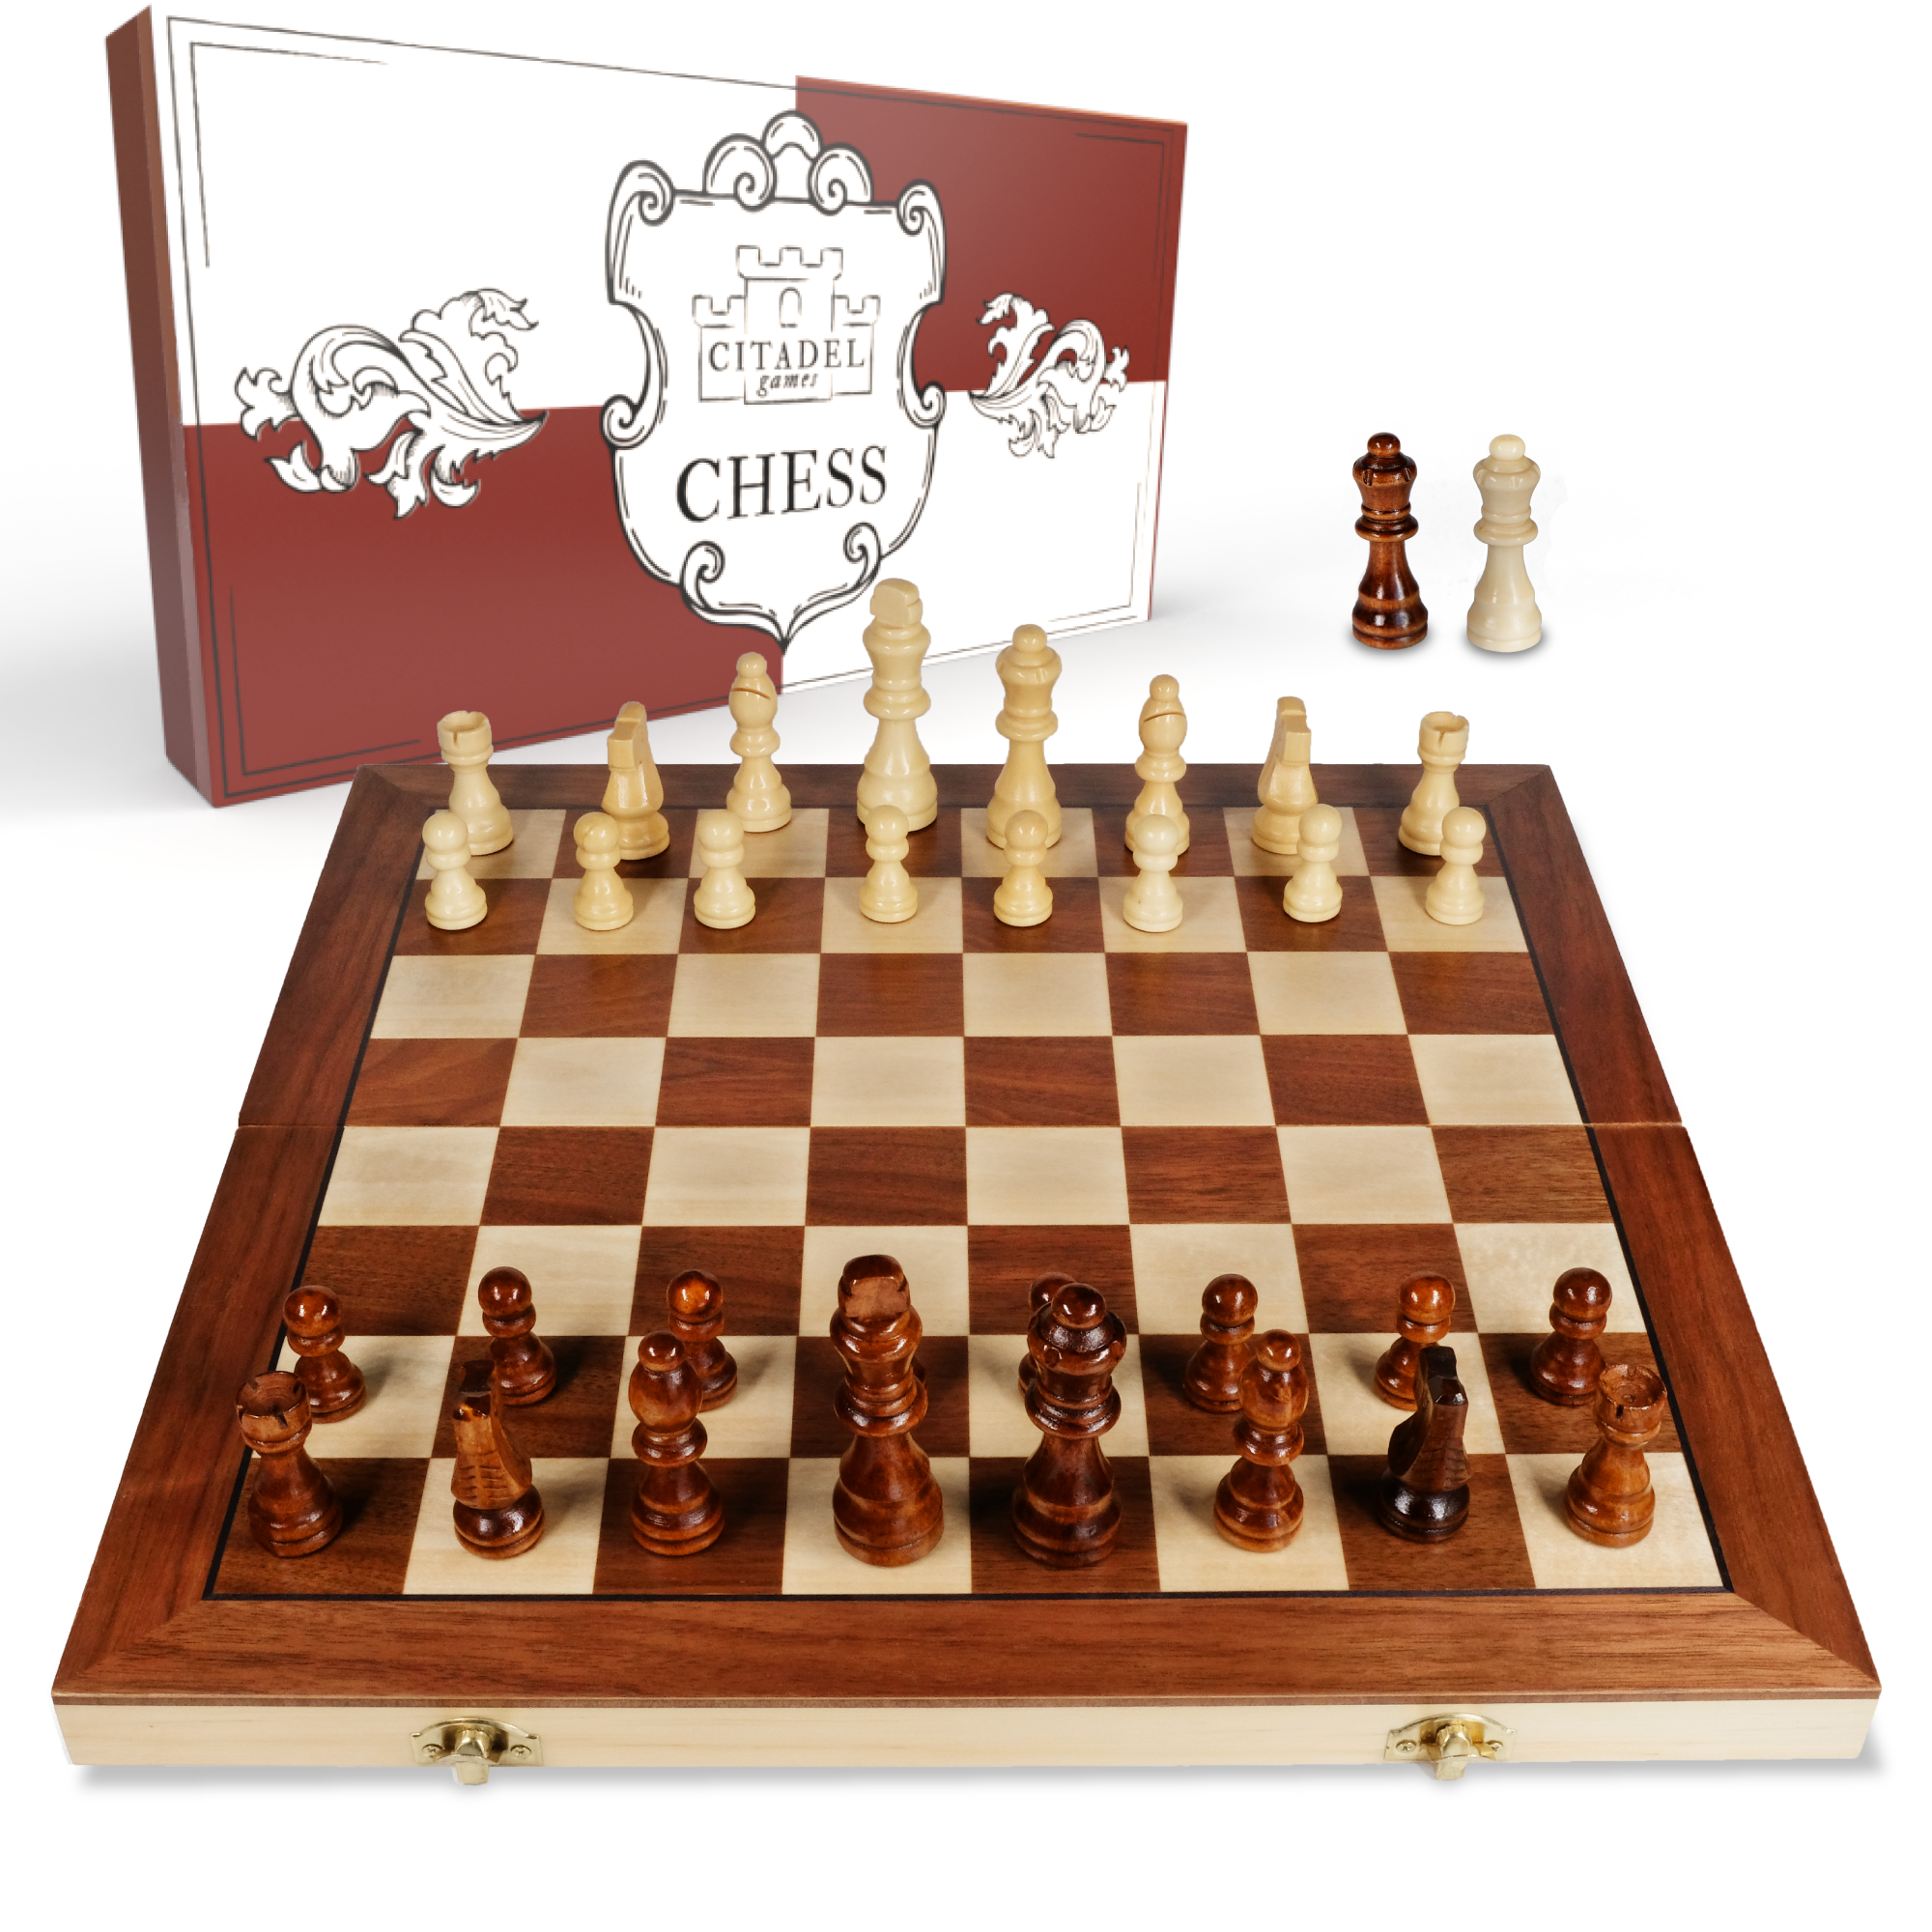  Chess Set, 15x15 Folding Magnetic Wooden Standard